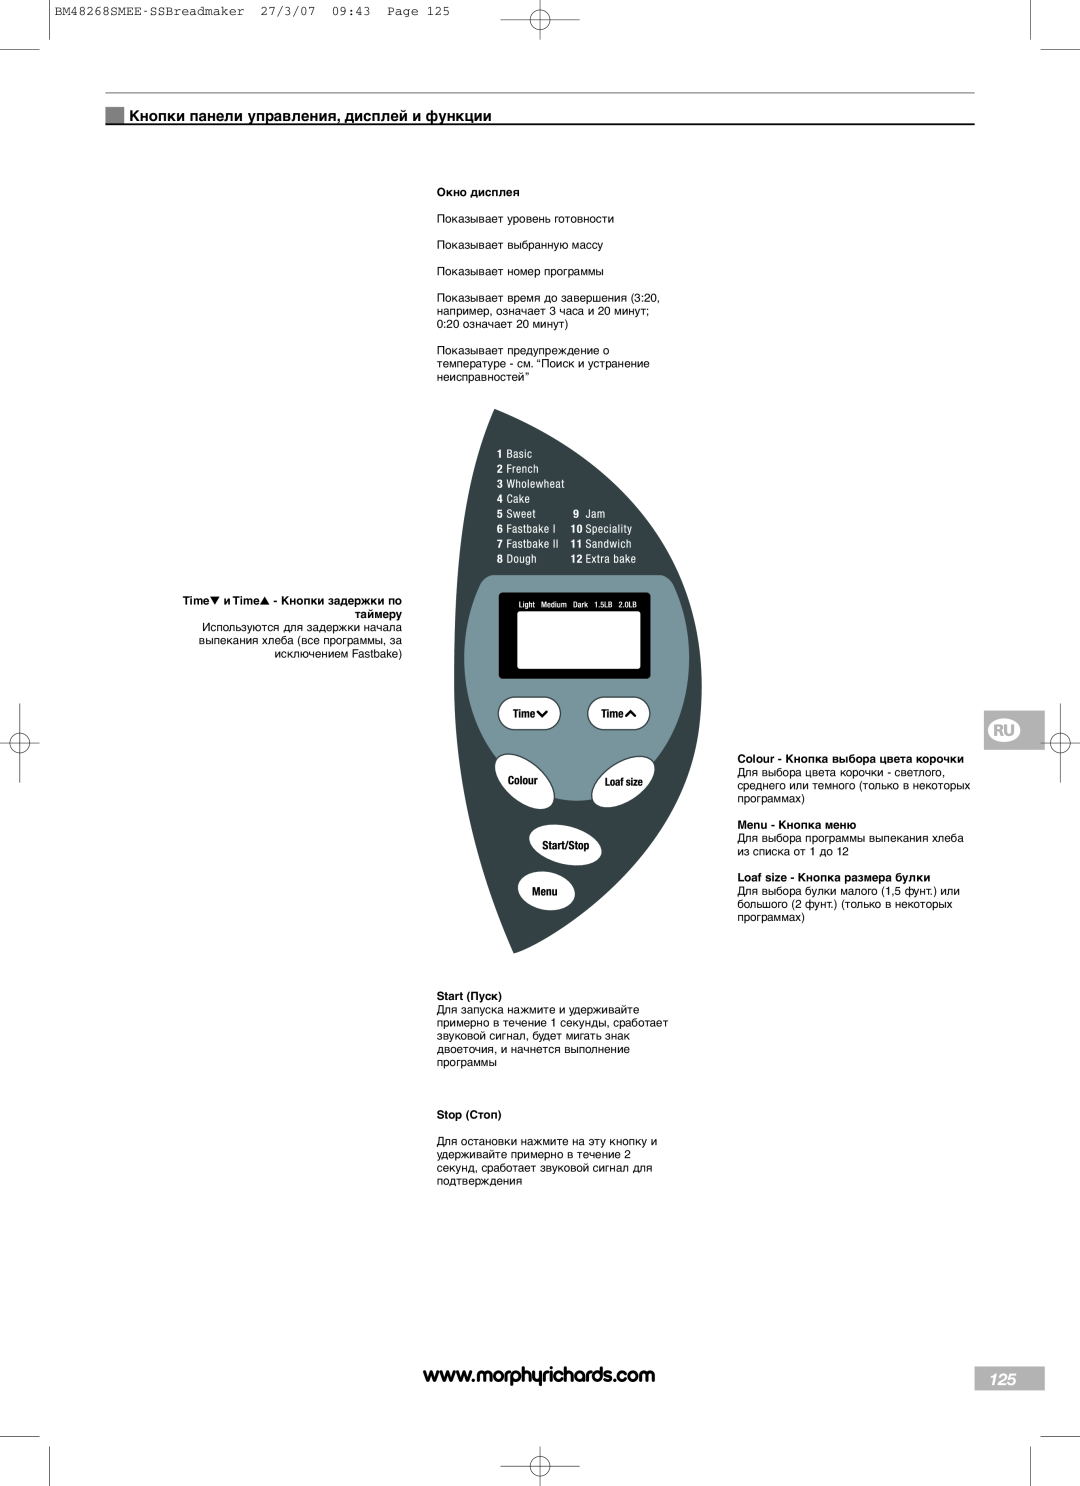 Morphy Richards Кнопки панели управления, дисплей и функции, BM48268SMEE-SSBreadmaker27/3/07 09:43 Page, Окно дисплея 